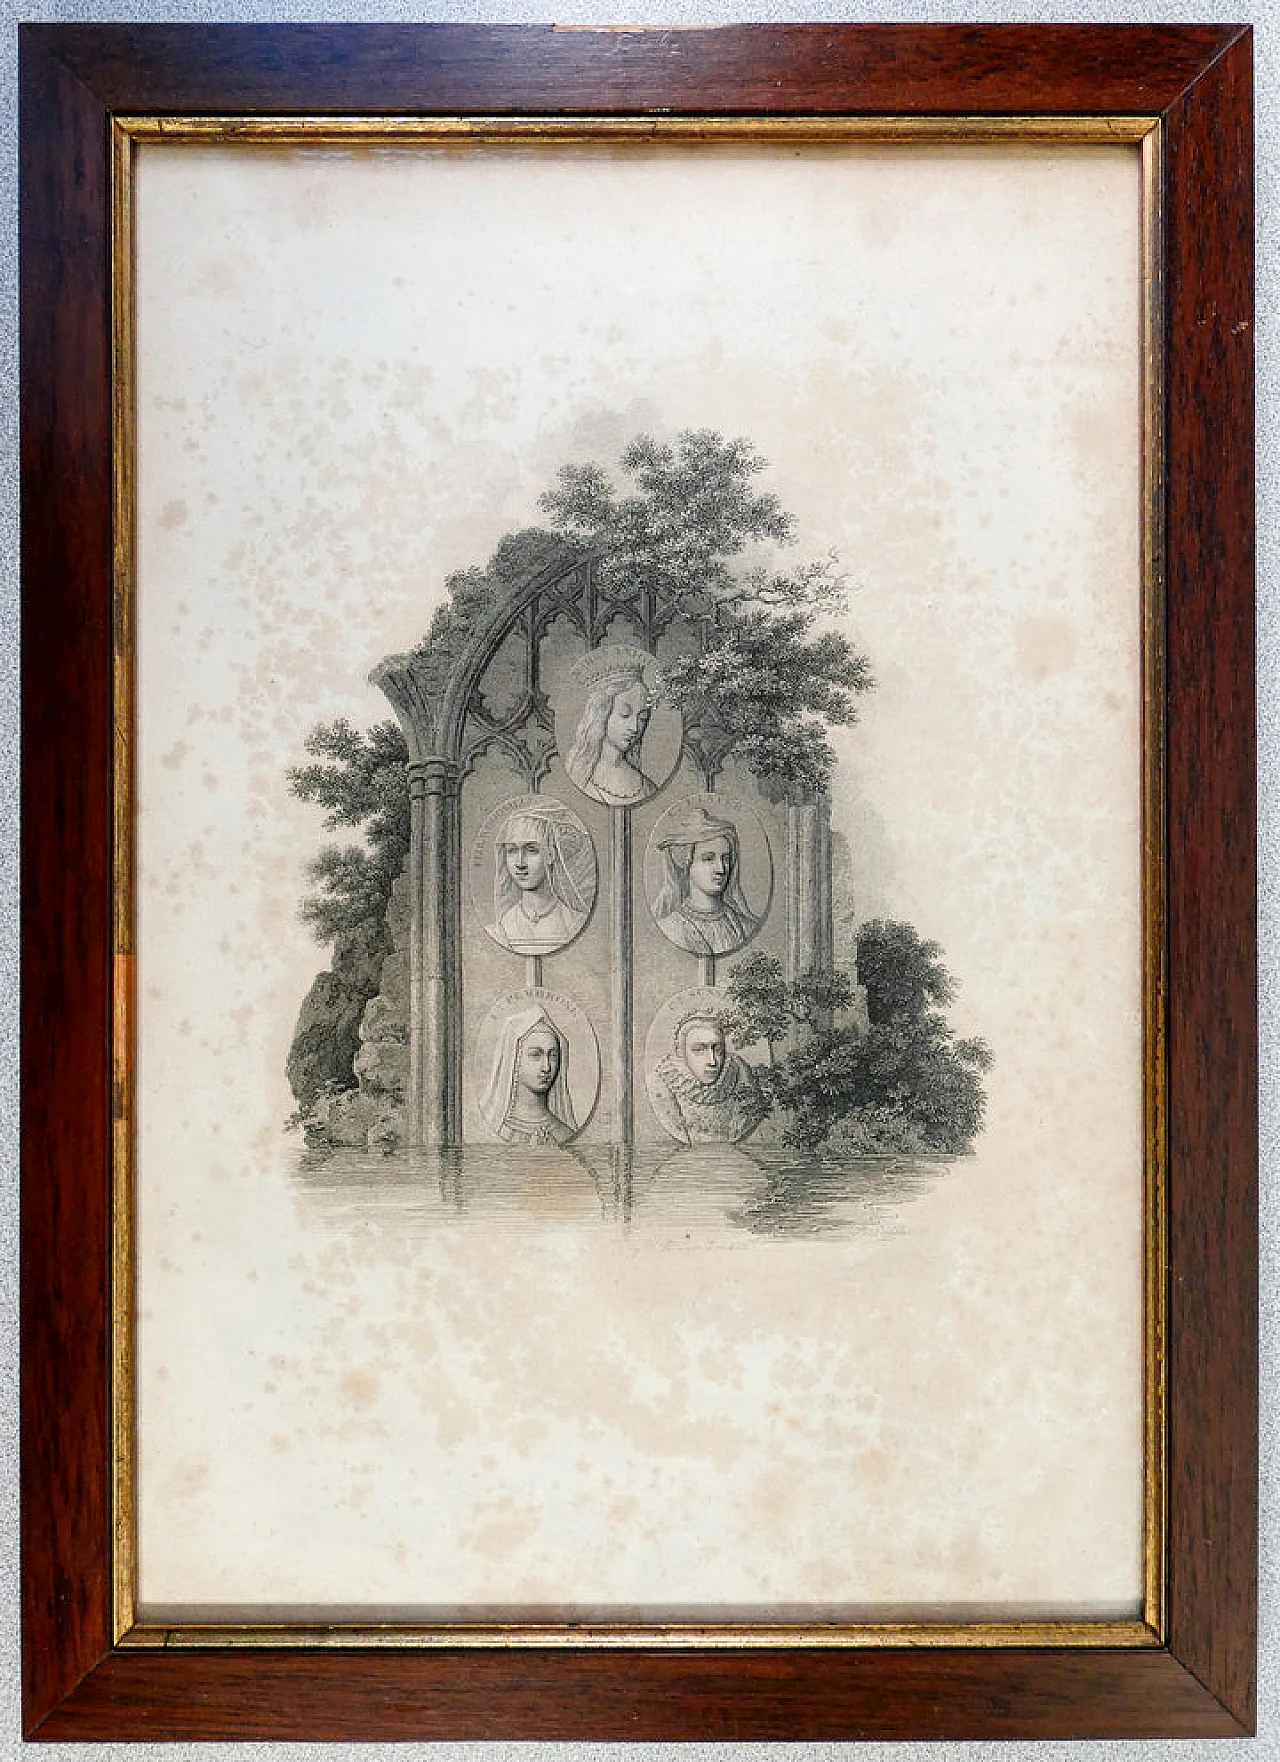 Robert Smirke, War of the Roses, etching, 1799 1